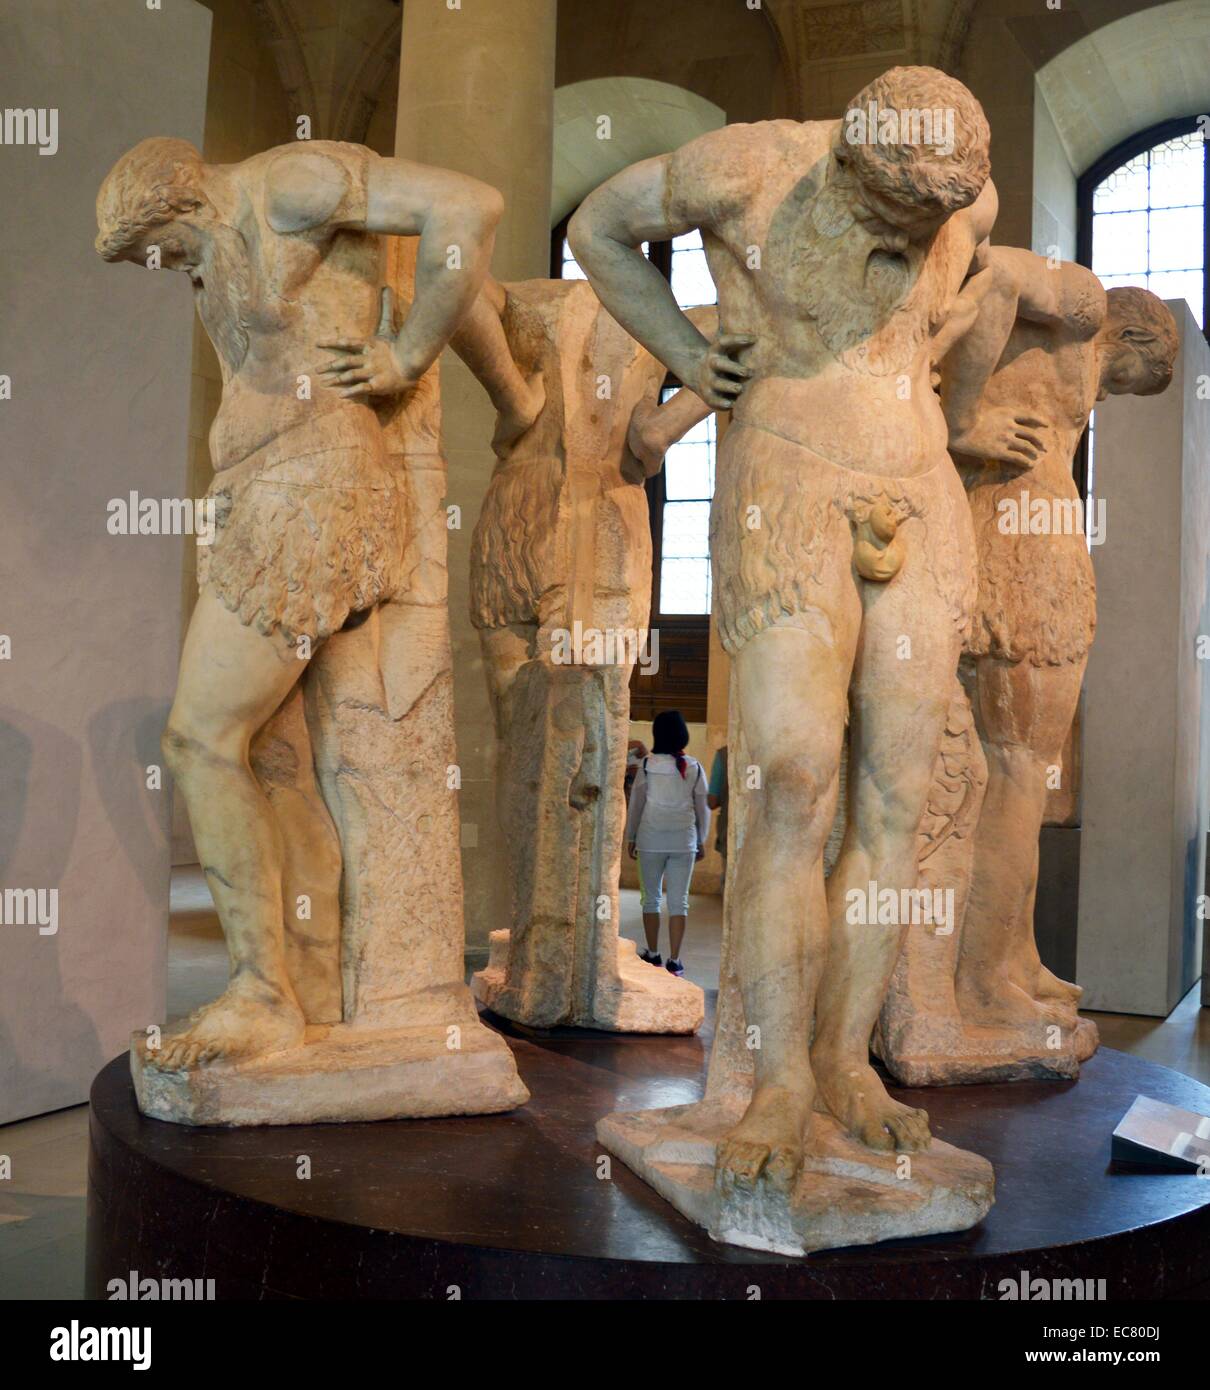 Grupo de mármol estatua los sátiros de Atlantis, Romano, siglo I A.C. Foto de stock